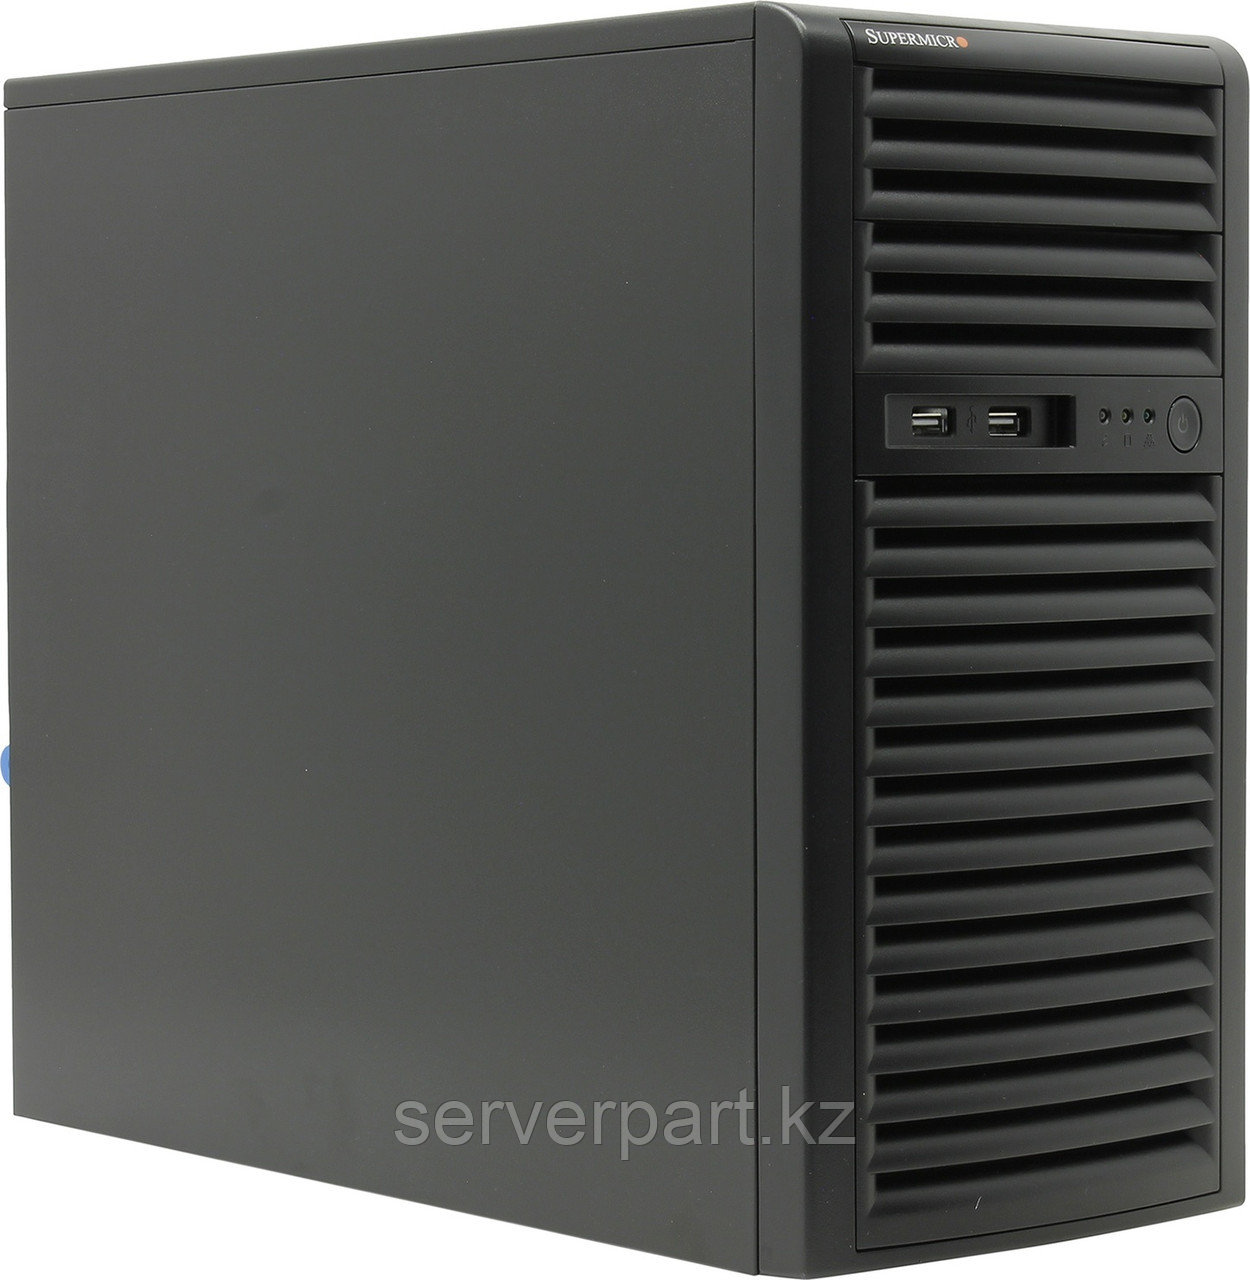 Сервер Supermicro 732-500B\X10DRL-F Tower 4LFF/1х8-core Intel Xeon E5-2620v4 2.1GHz/no RAM/no HDD